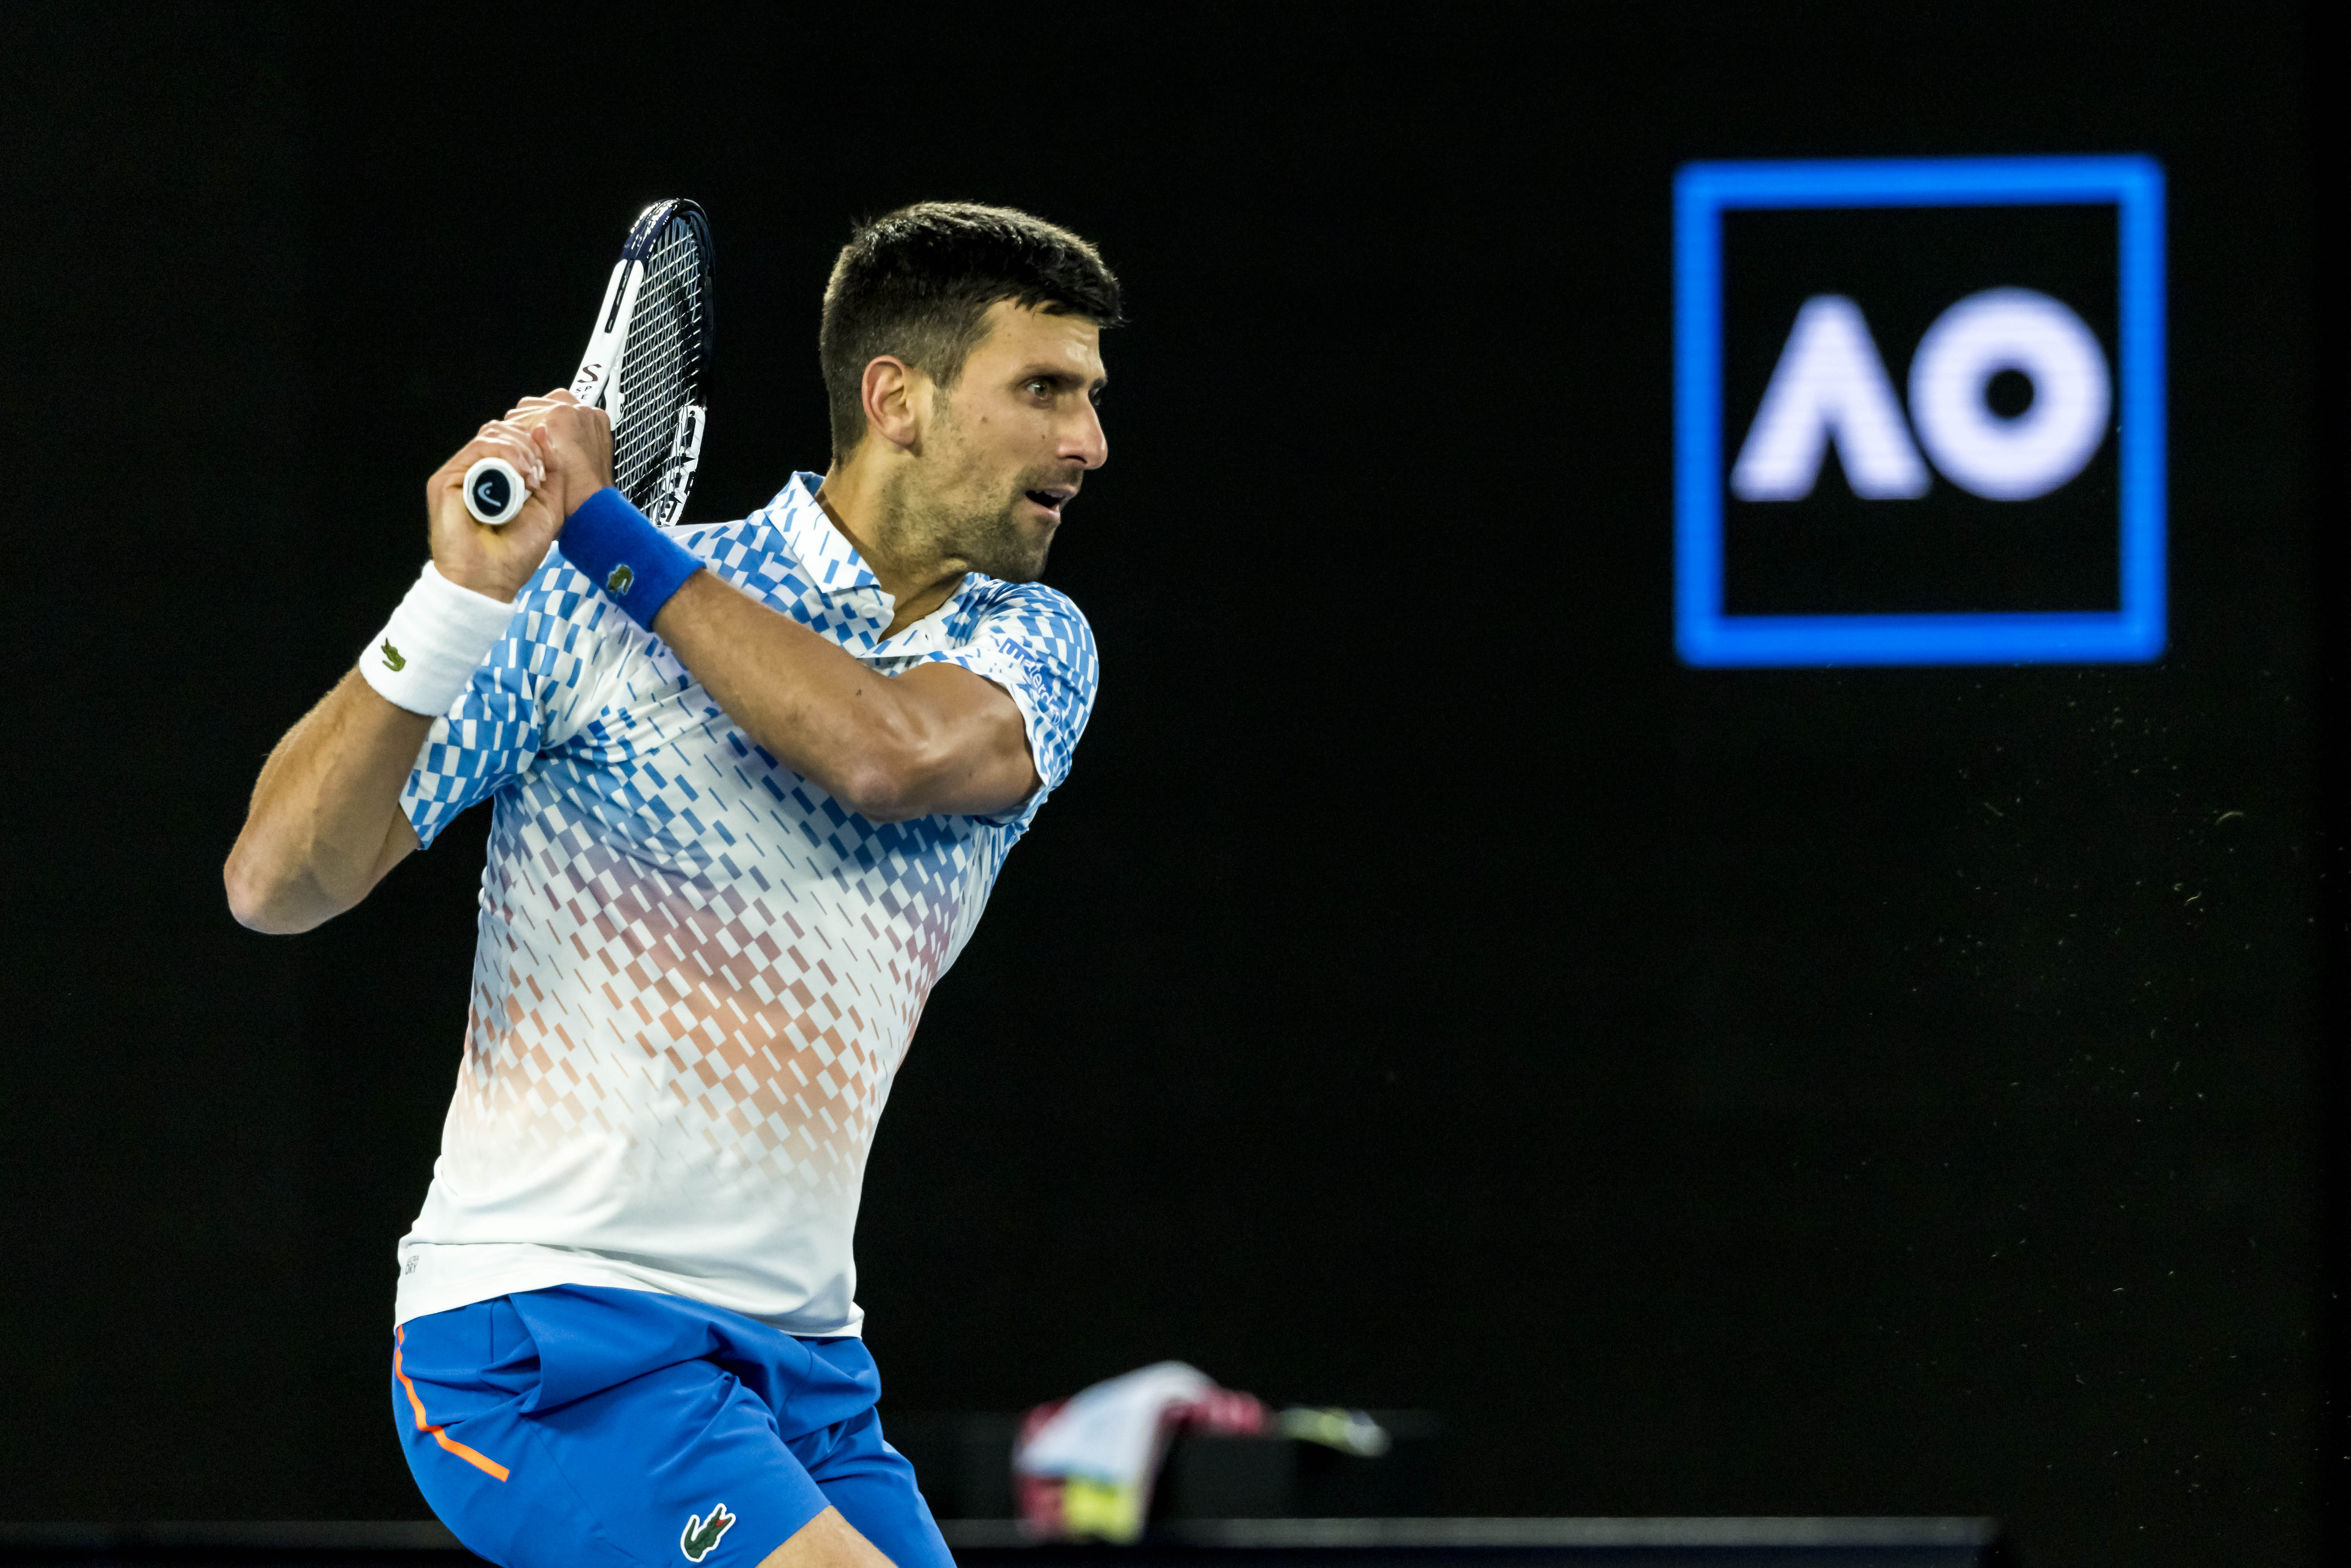 Novak Djokovic extends Australian Open winning streak to 23 matches after stopping qualifier Couacaud